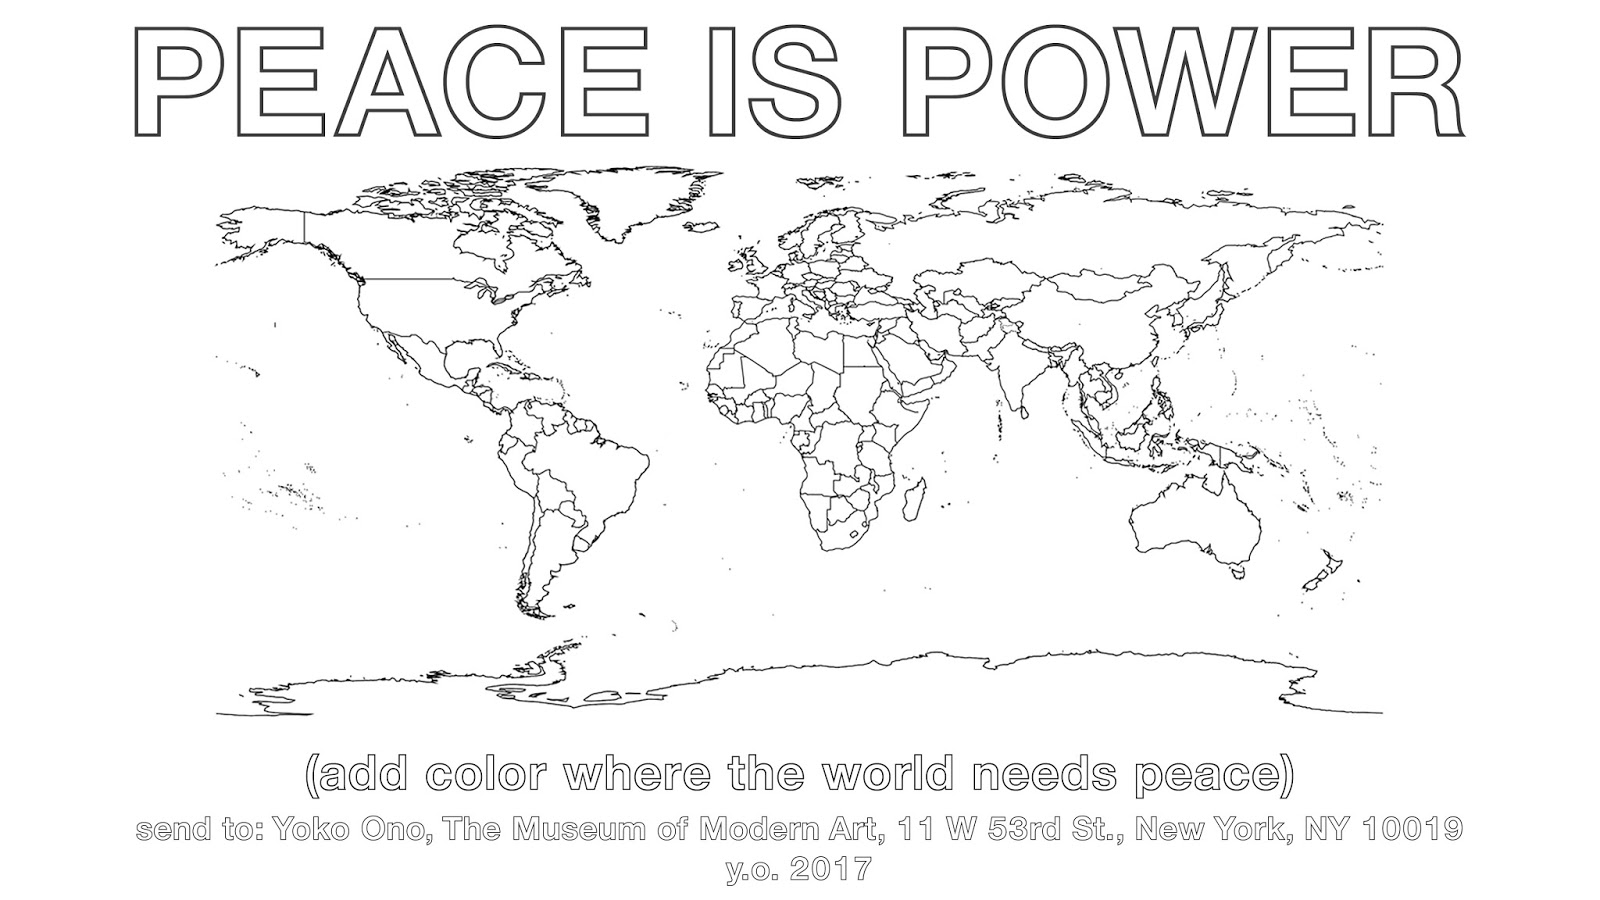 Карта Йоко. Yoko Ono imagine Peace. Peace to Power. Йоко оно Peace is Power.